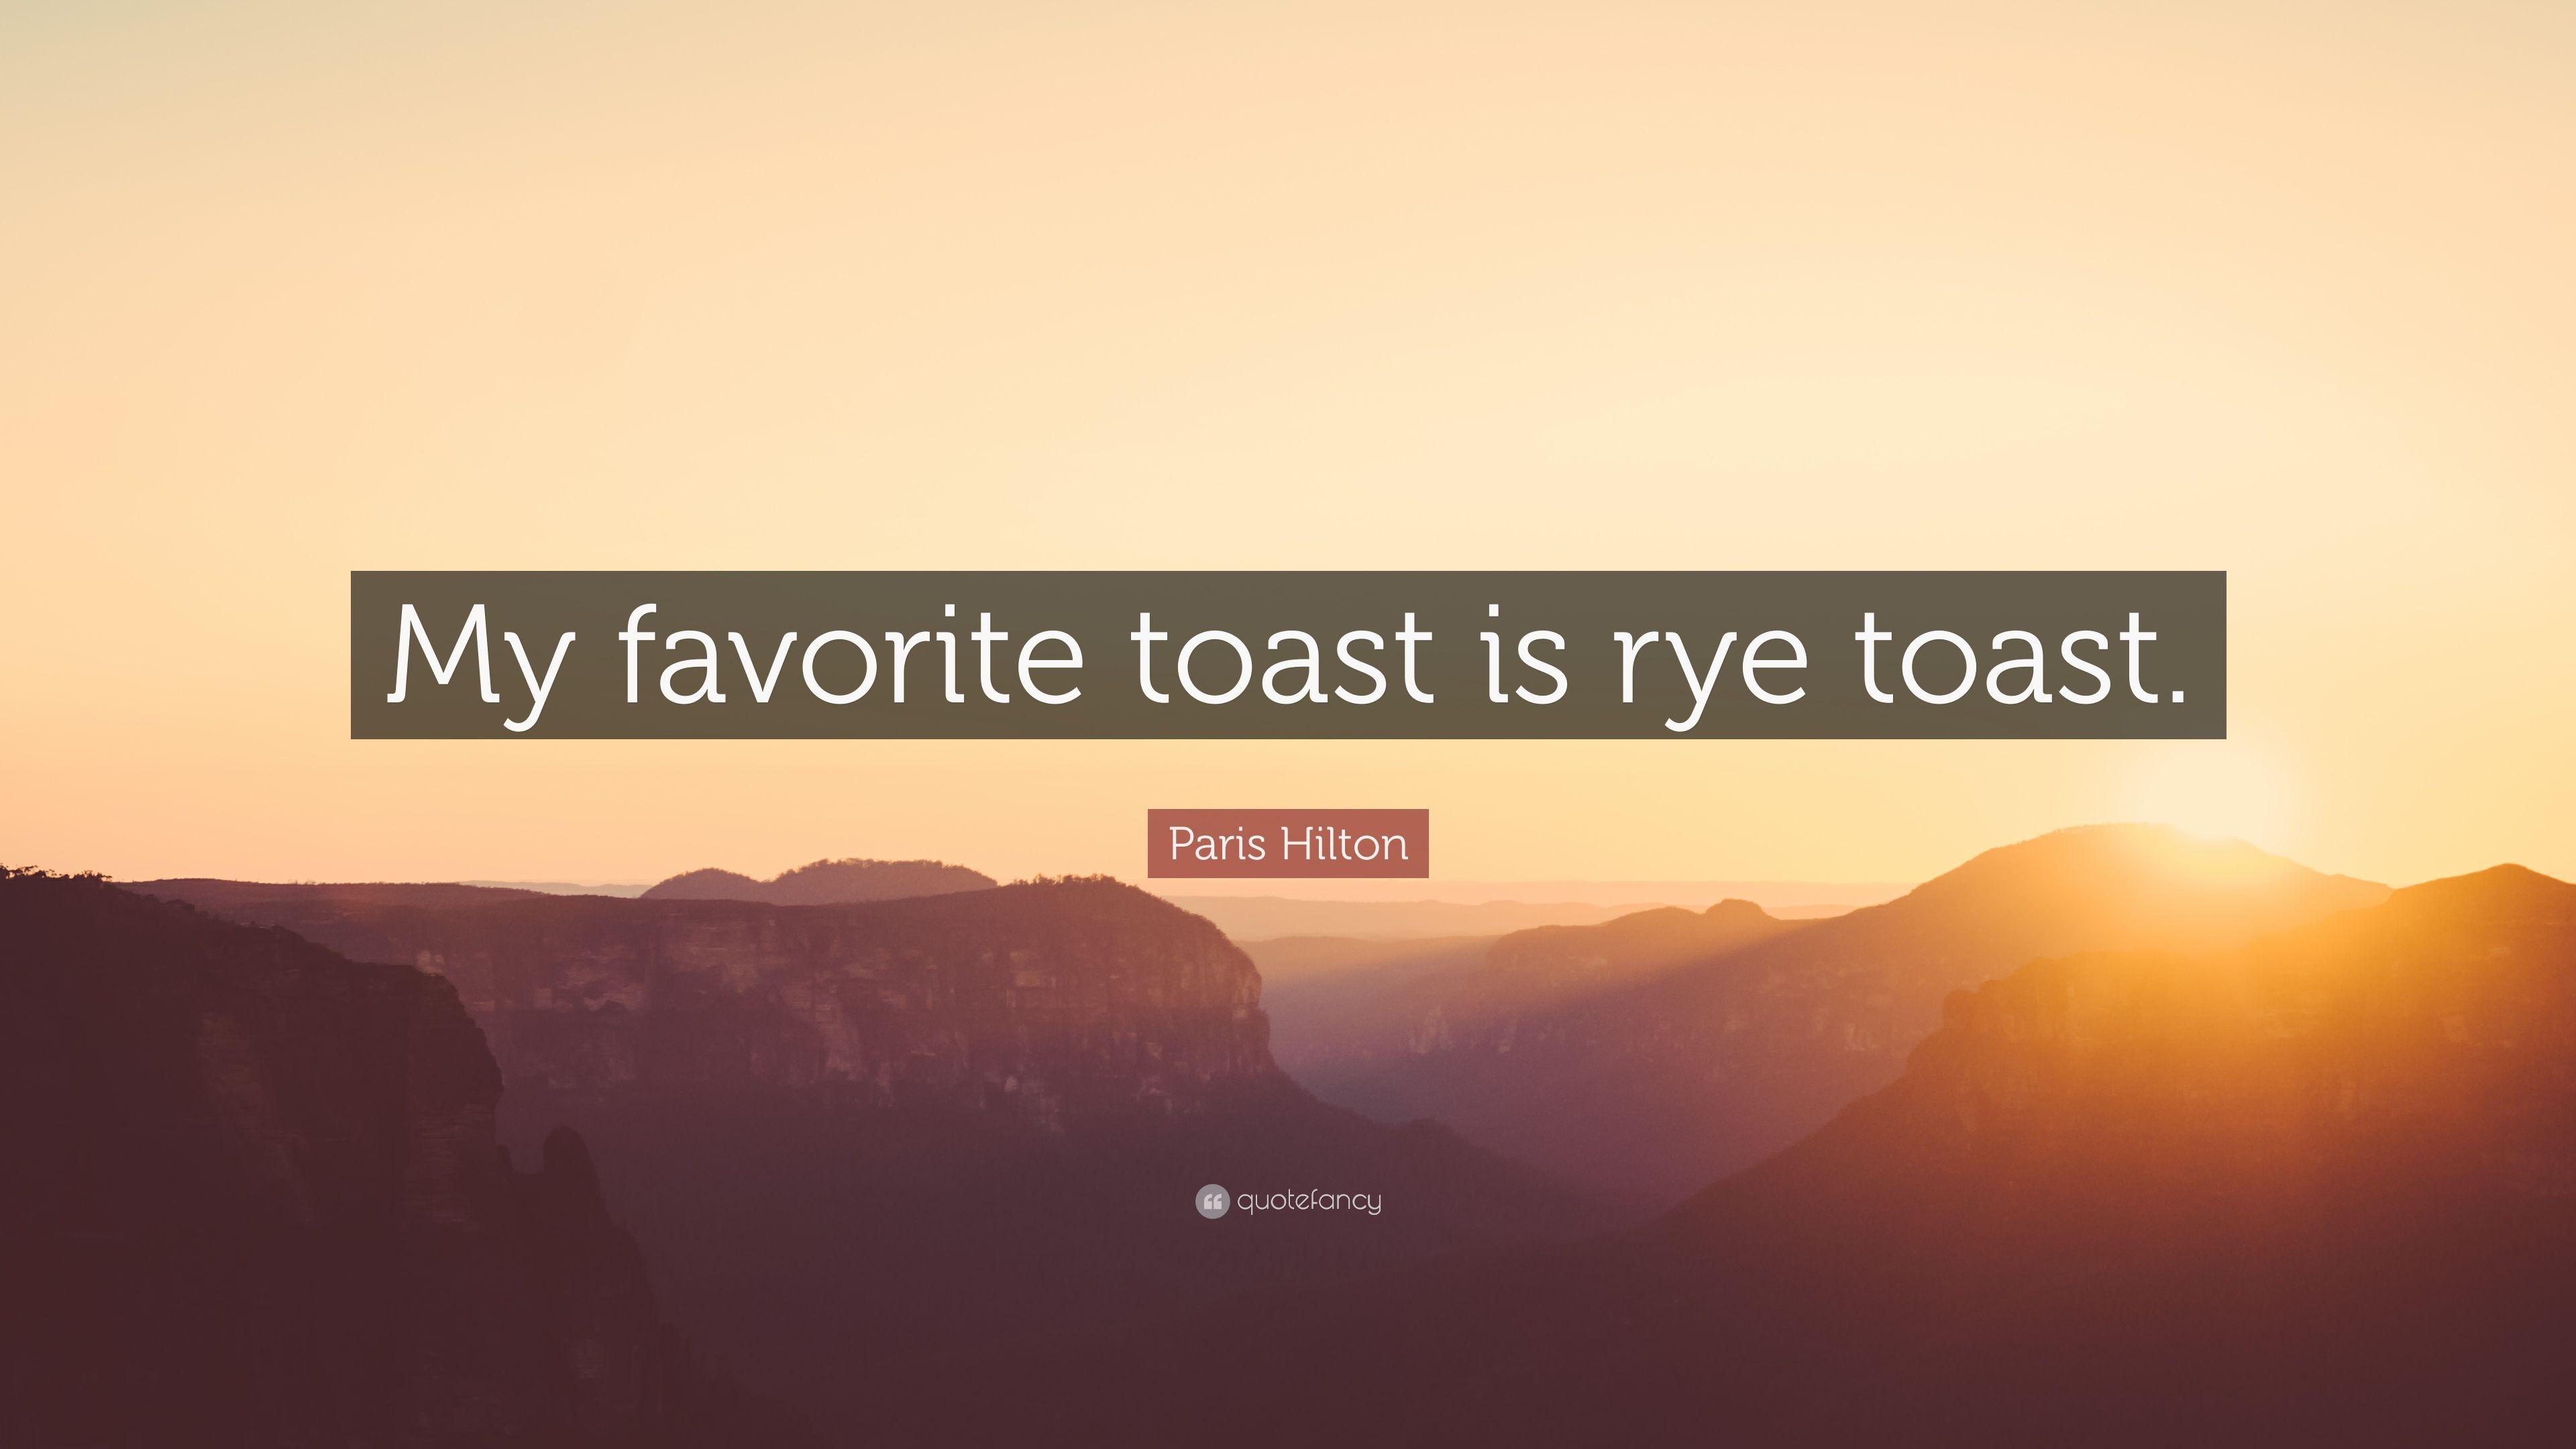 Paris Hilton Quote: “My favorite toast is rye toast.” 7 wallpaper